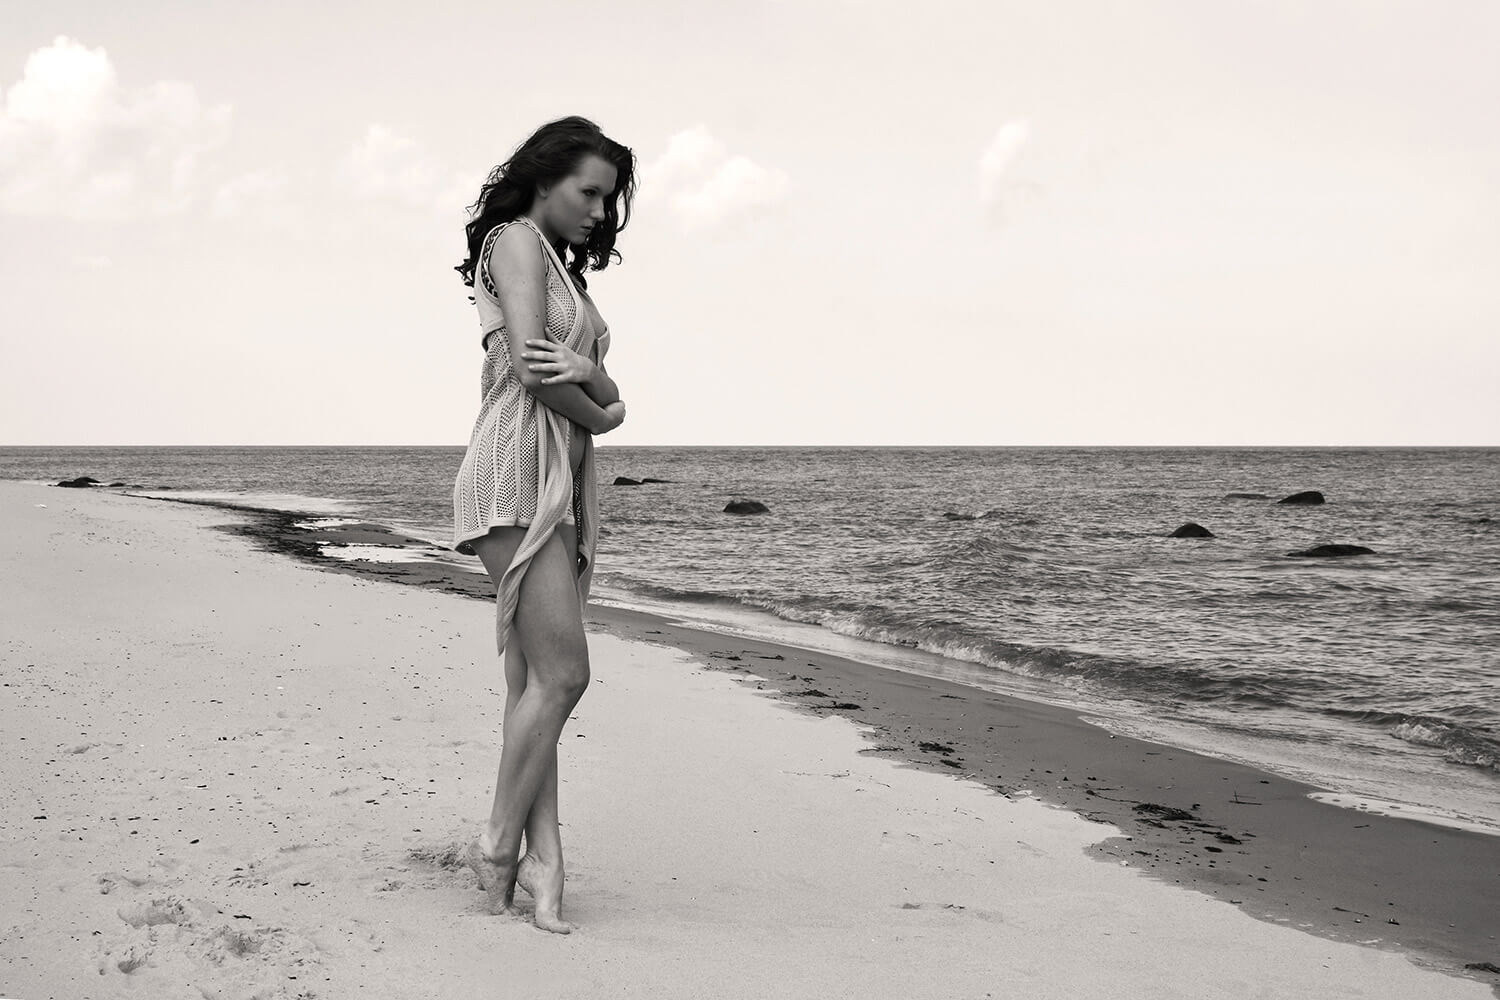 fashion fotografie ženy v delším svetru na pláži laděná do hněda